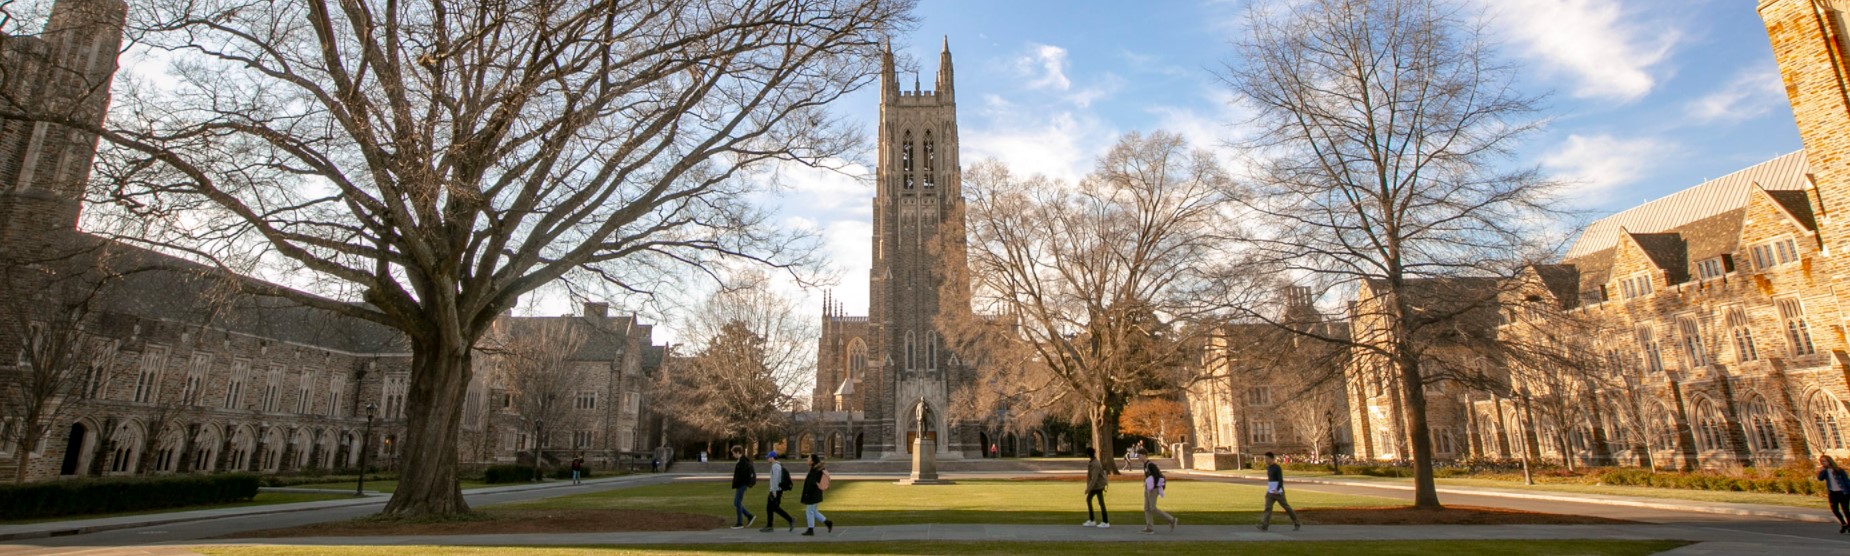 Duke University, North Carolina